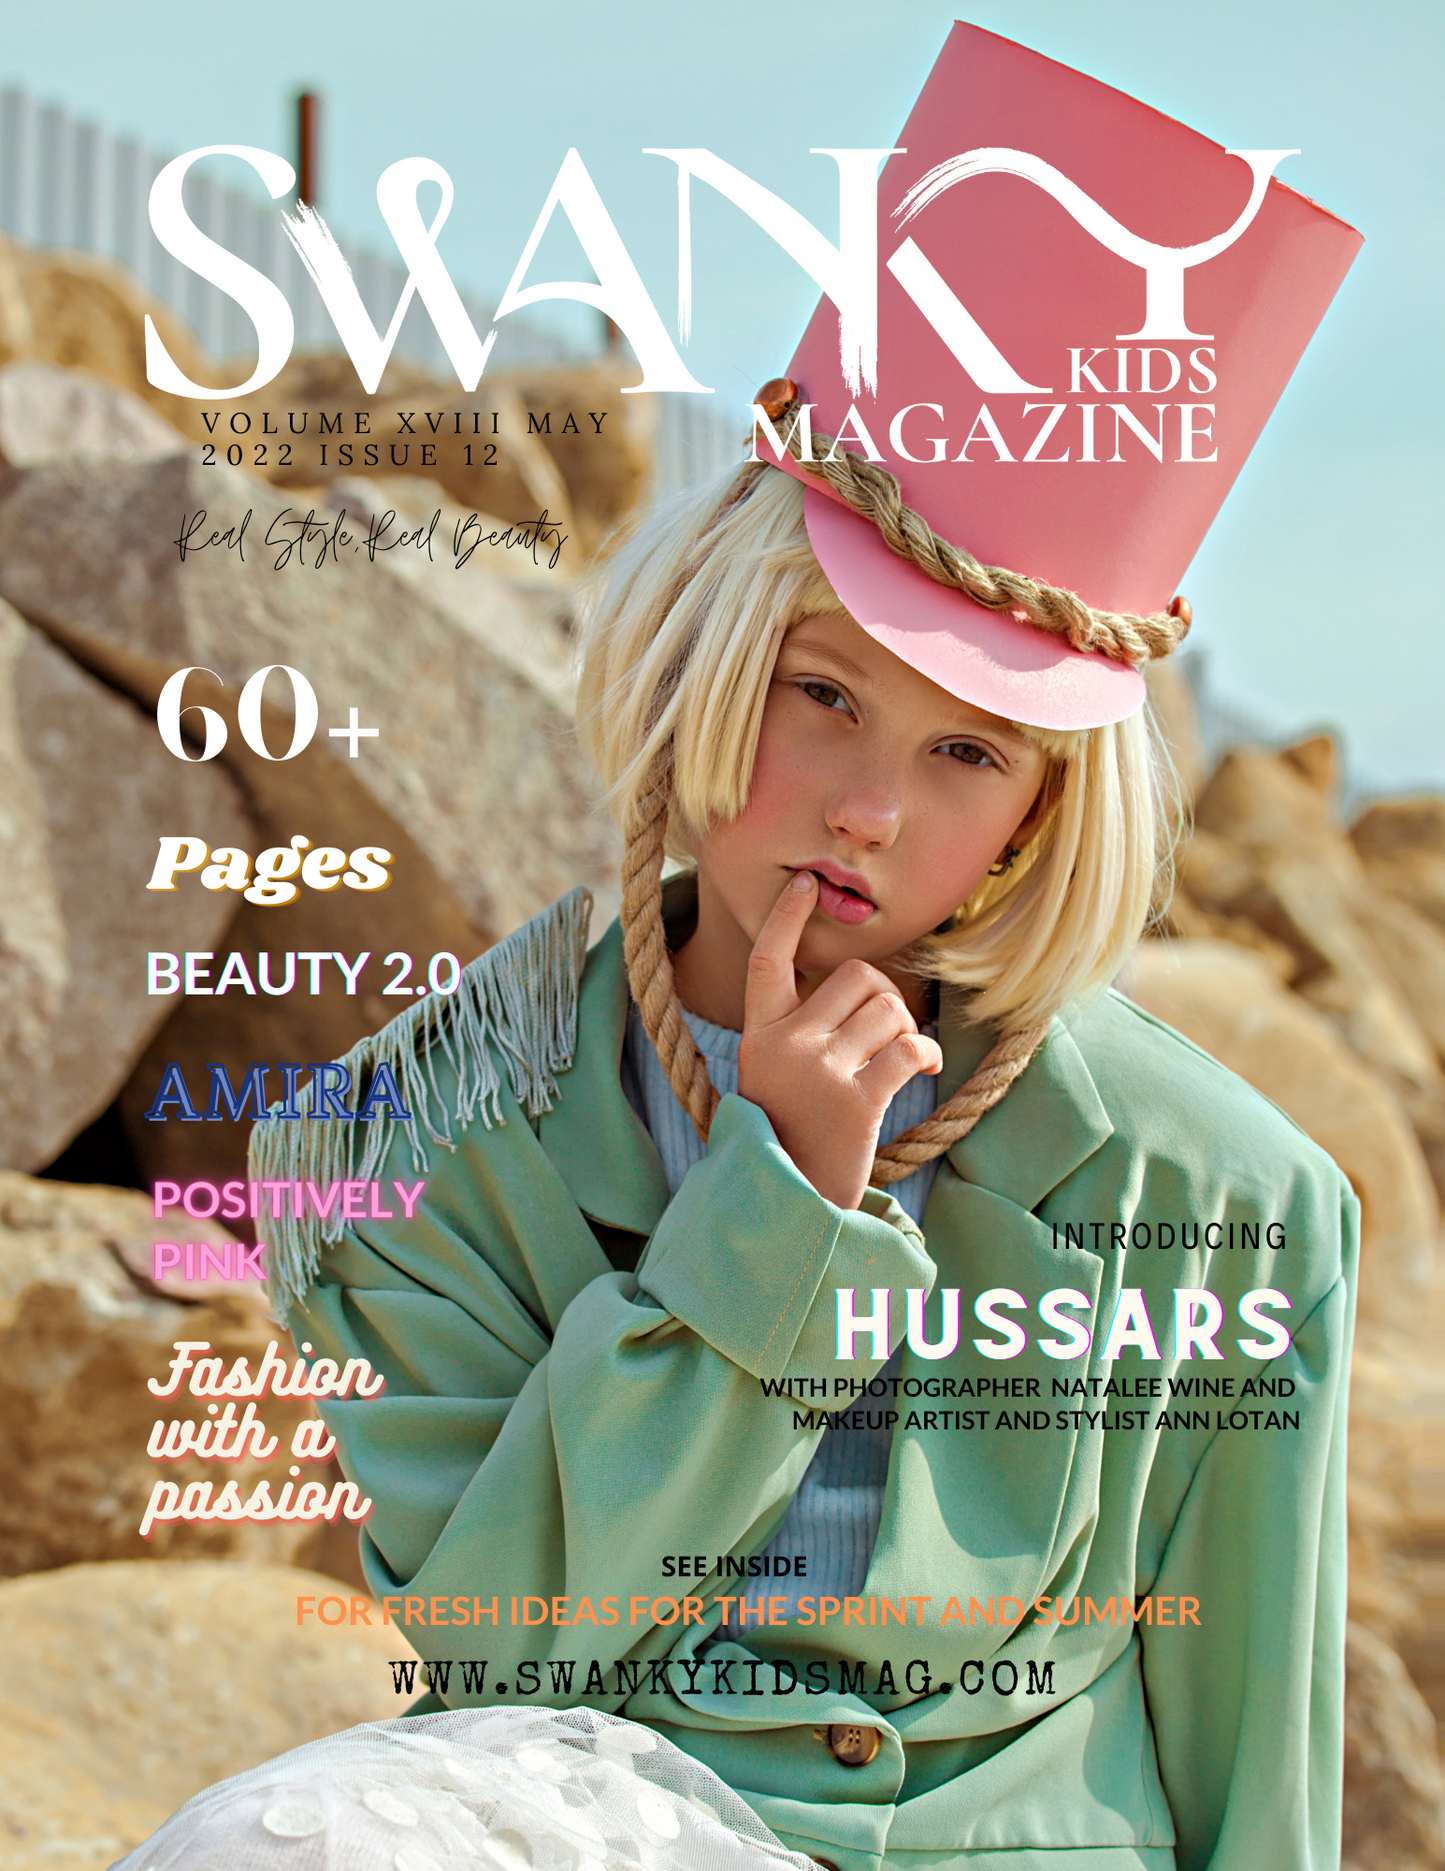 Swanky Kids Magazine MAY 2022 VOL XVIII Issue 12